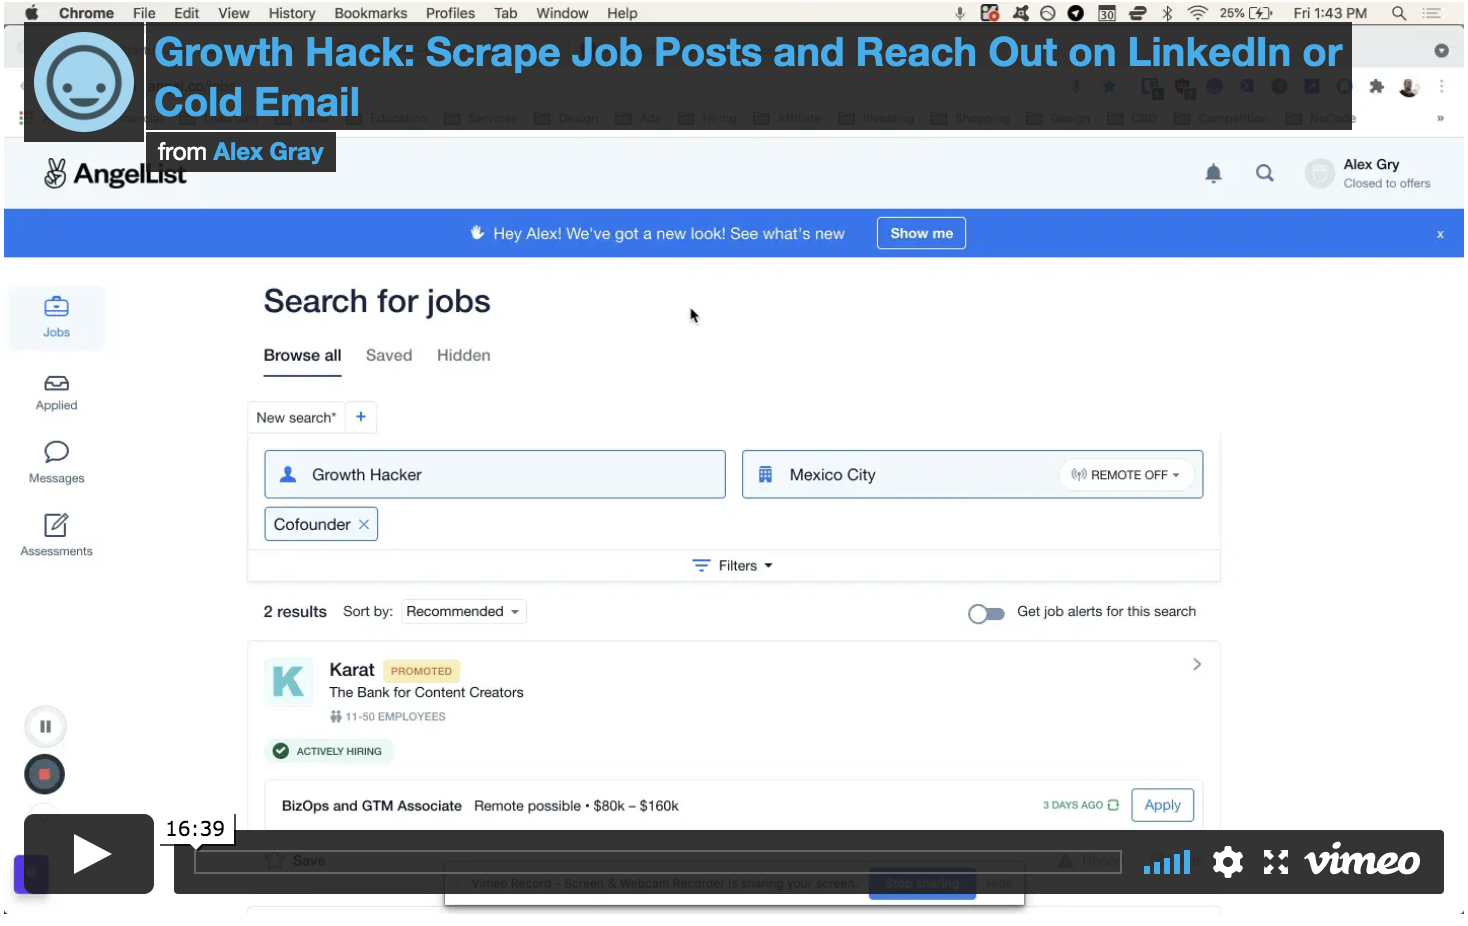 Scrape job postings and outreach on LinkedIn